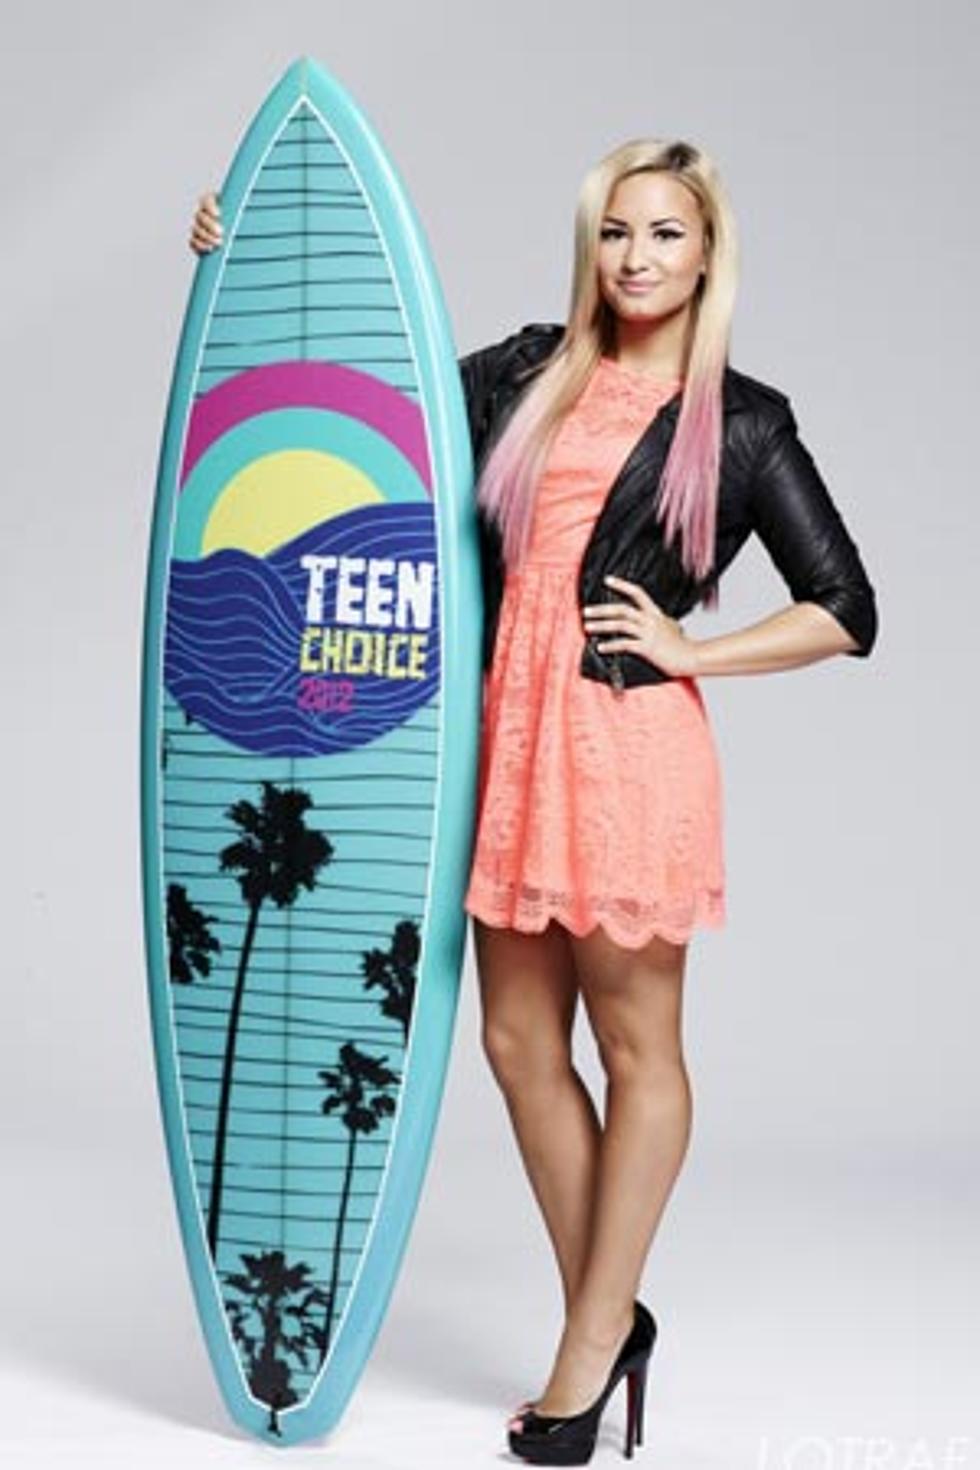 Demi Lovato Shows Off Killer Legs in 2012 Teen Choice Awards Promo